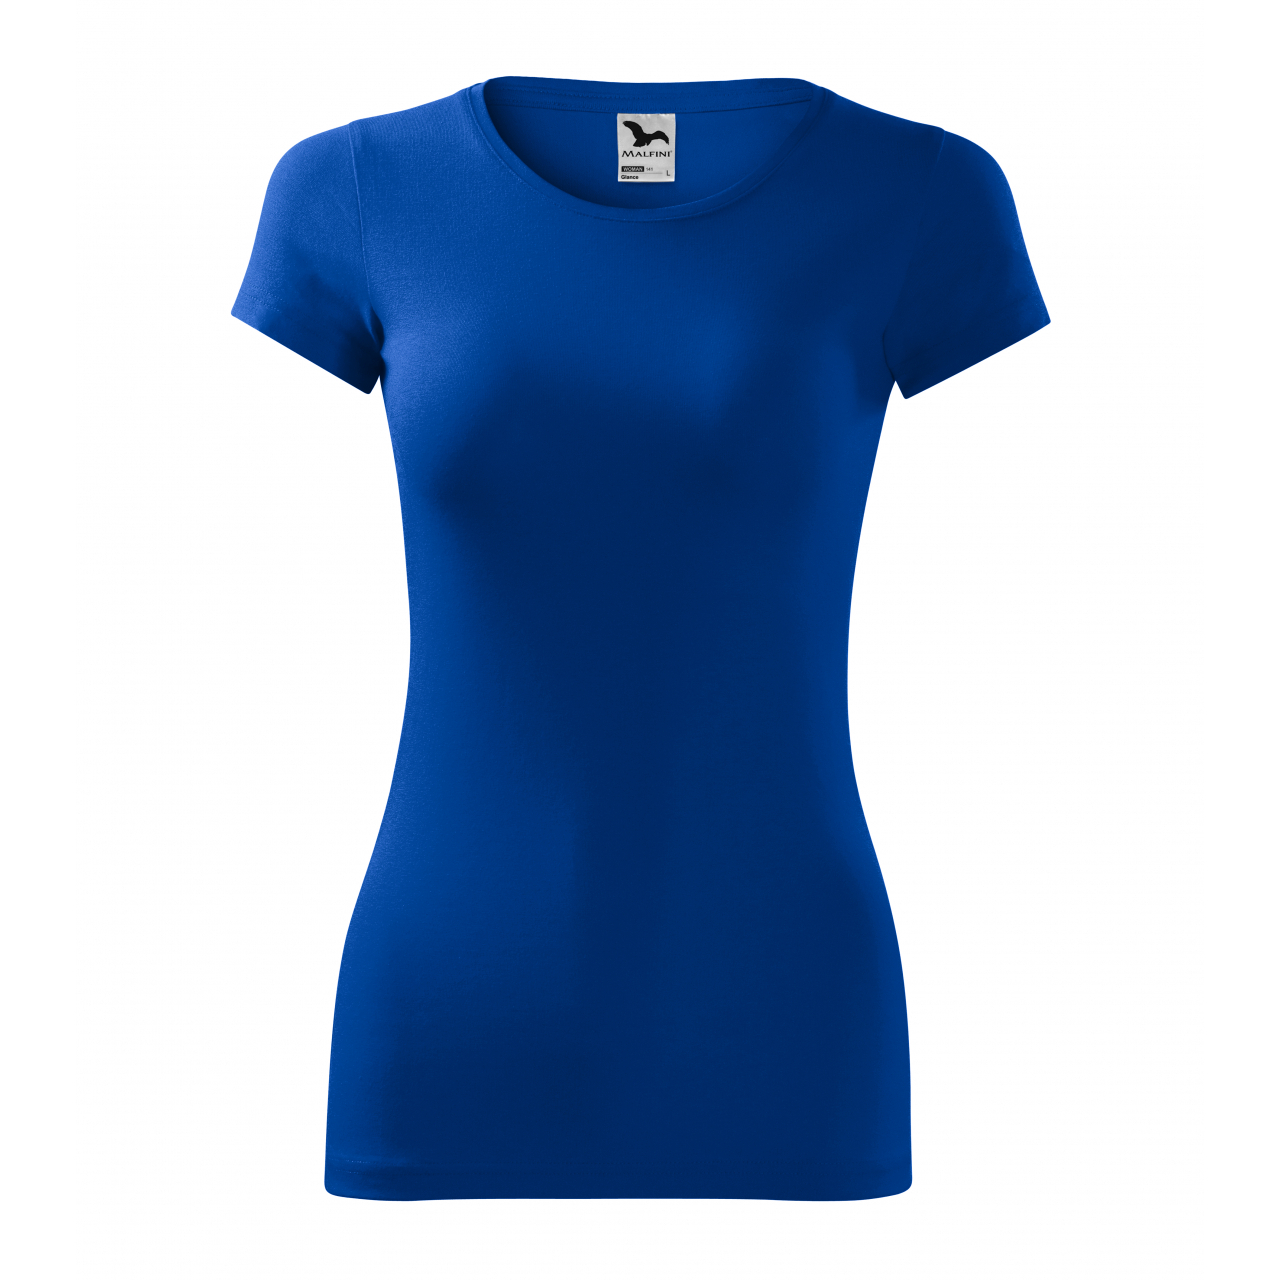 Triko dámské Malfini Glance - modré, XL